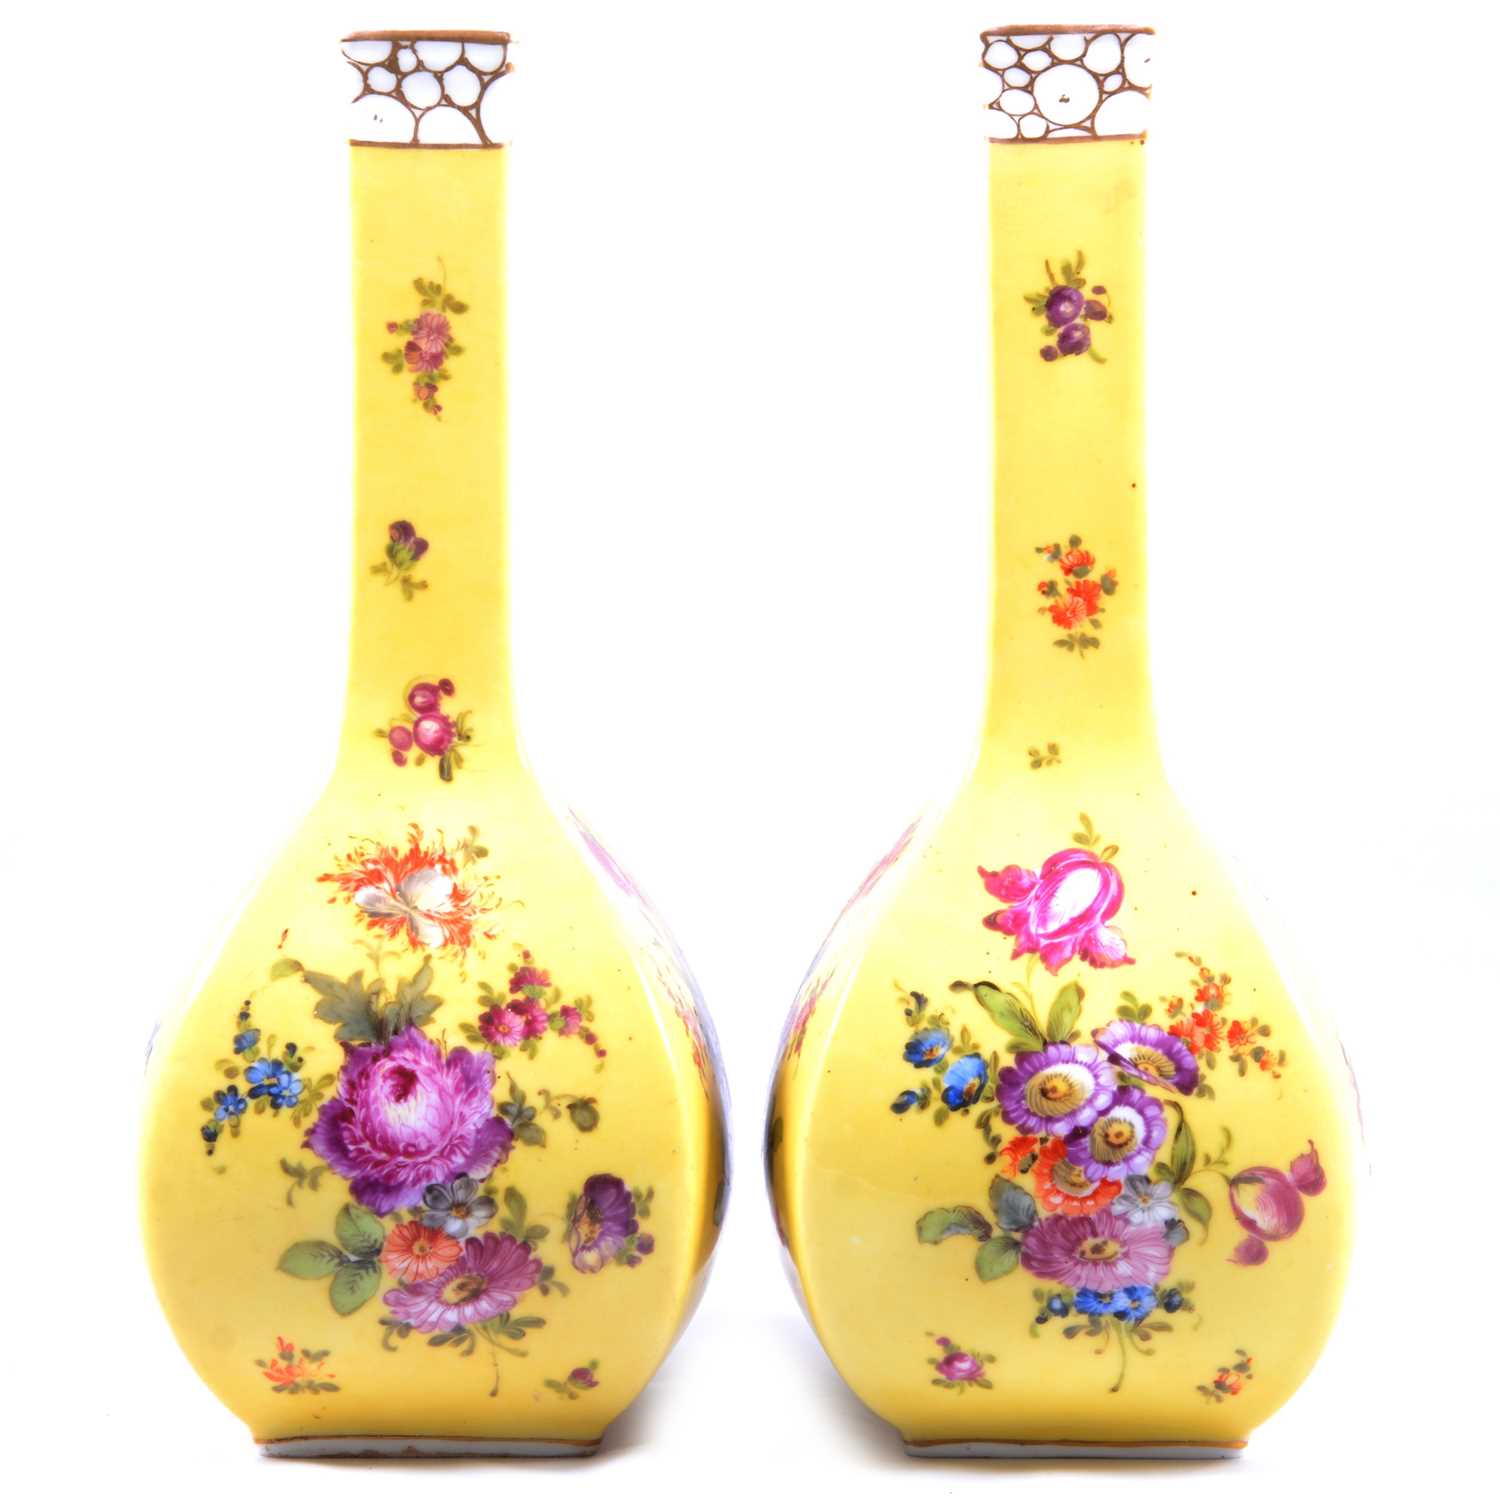 Pair of Meissen style vases, late 19th century